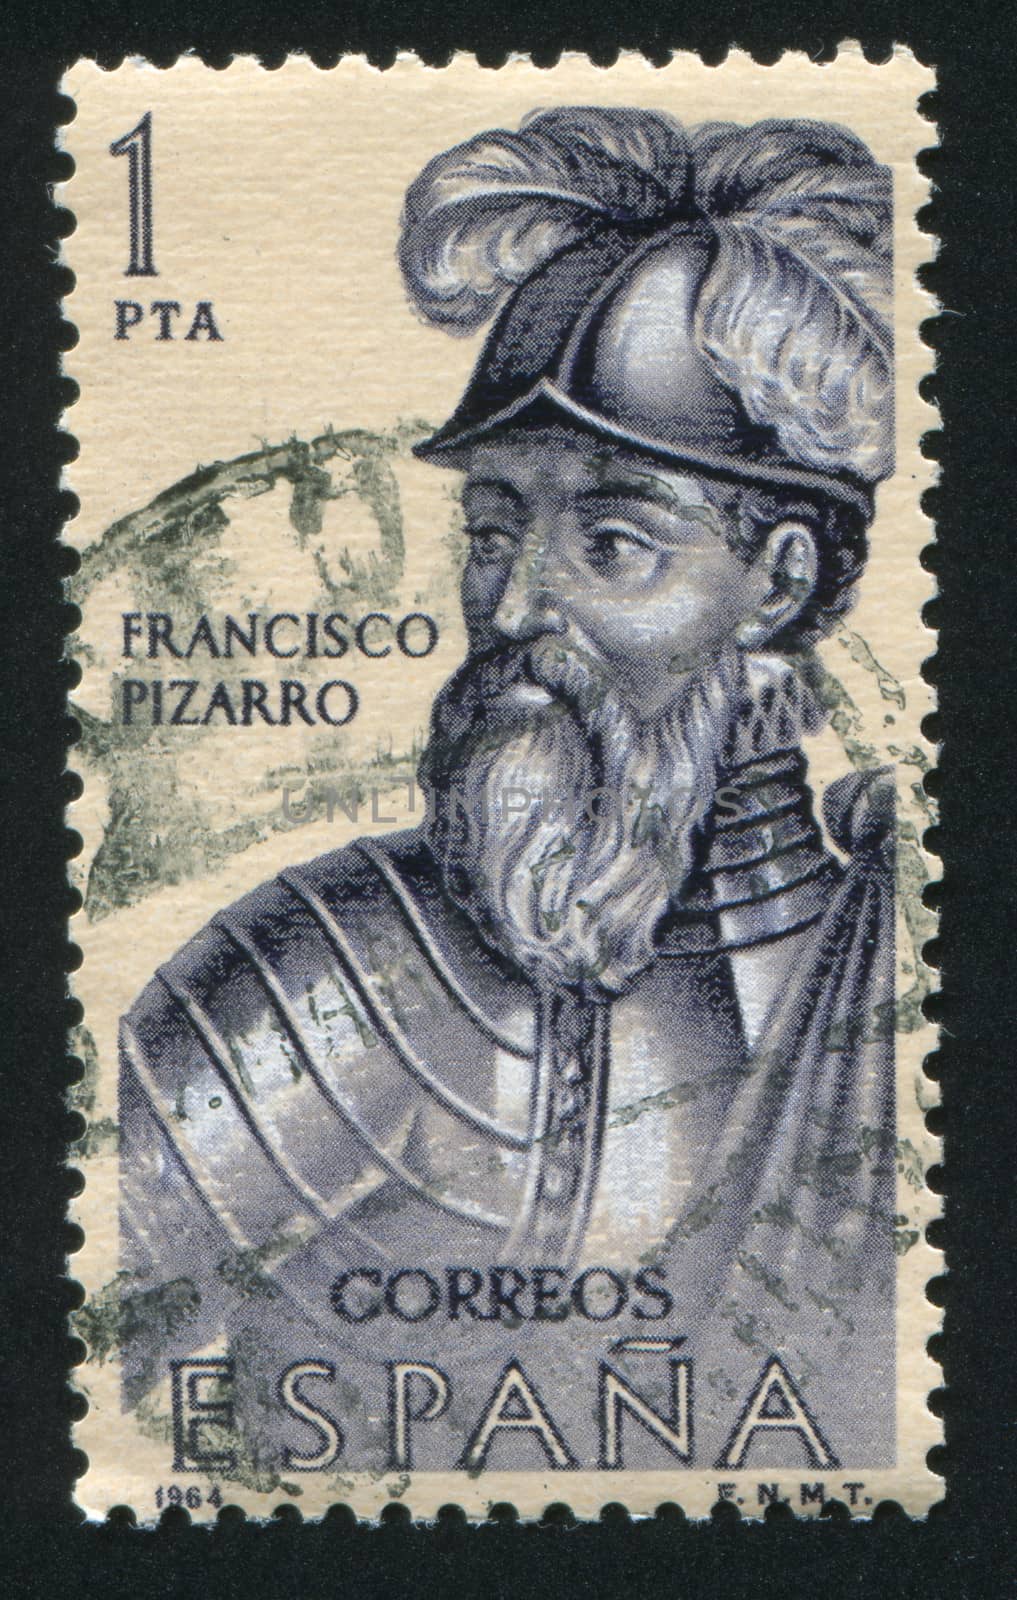 SPAIN - CIRCA 1964: stamp printed by Spain, shows Francisco Pizarro, circa 1964